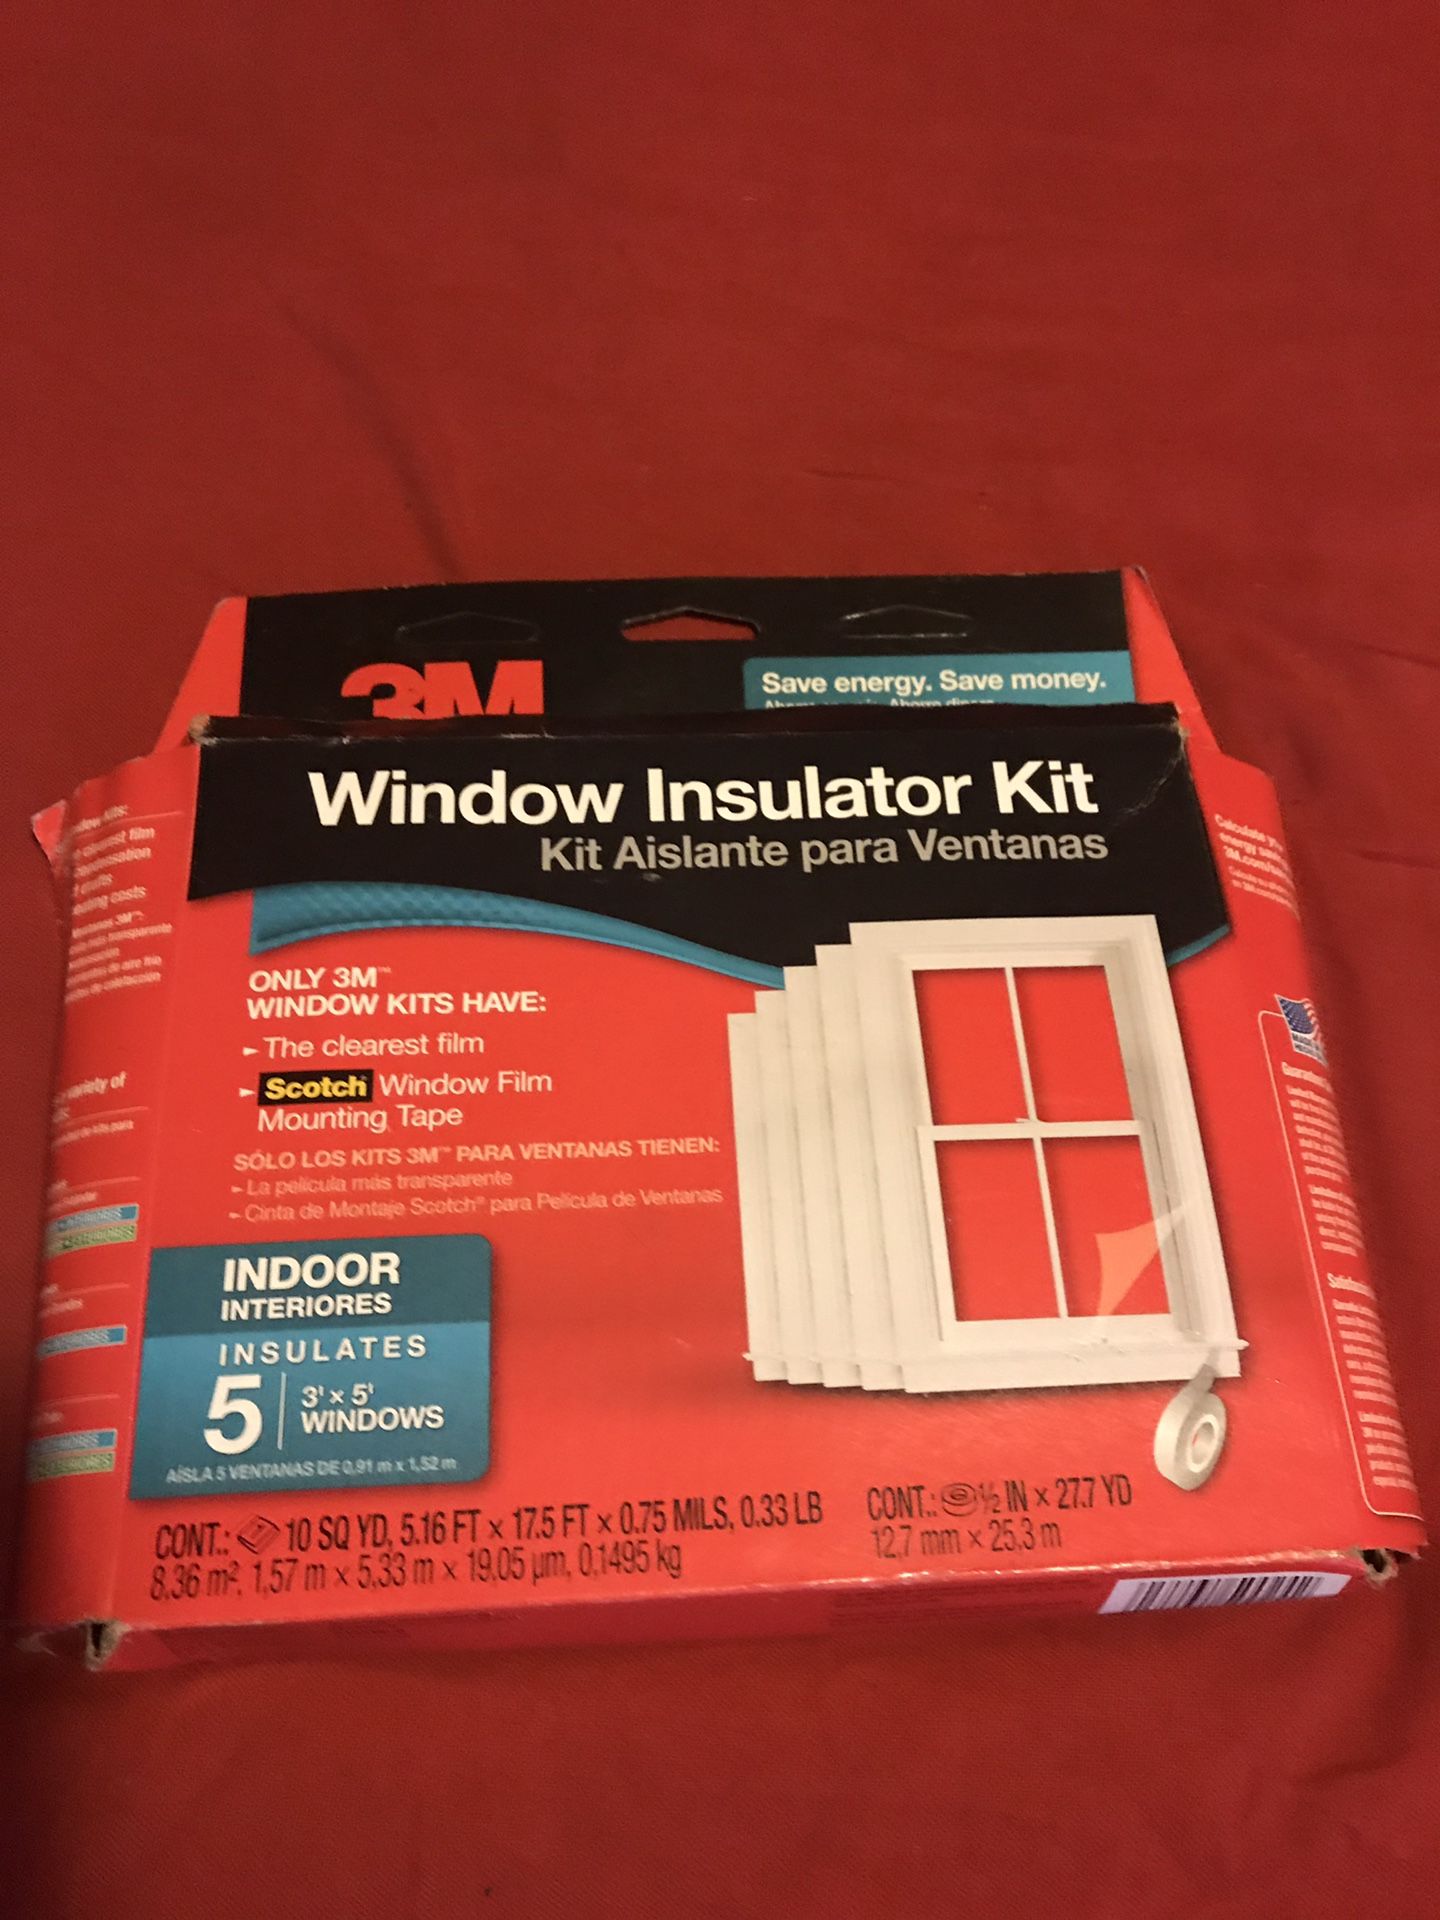 window insulator kit does 5 windows $8